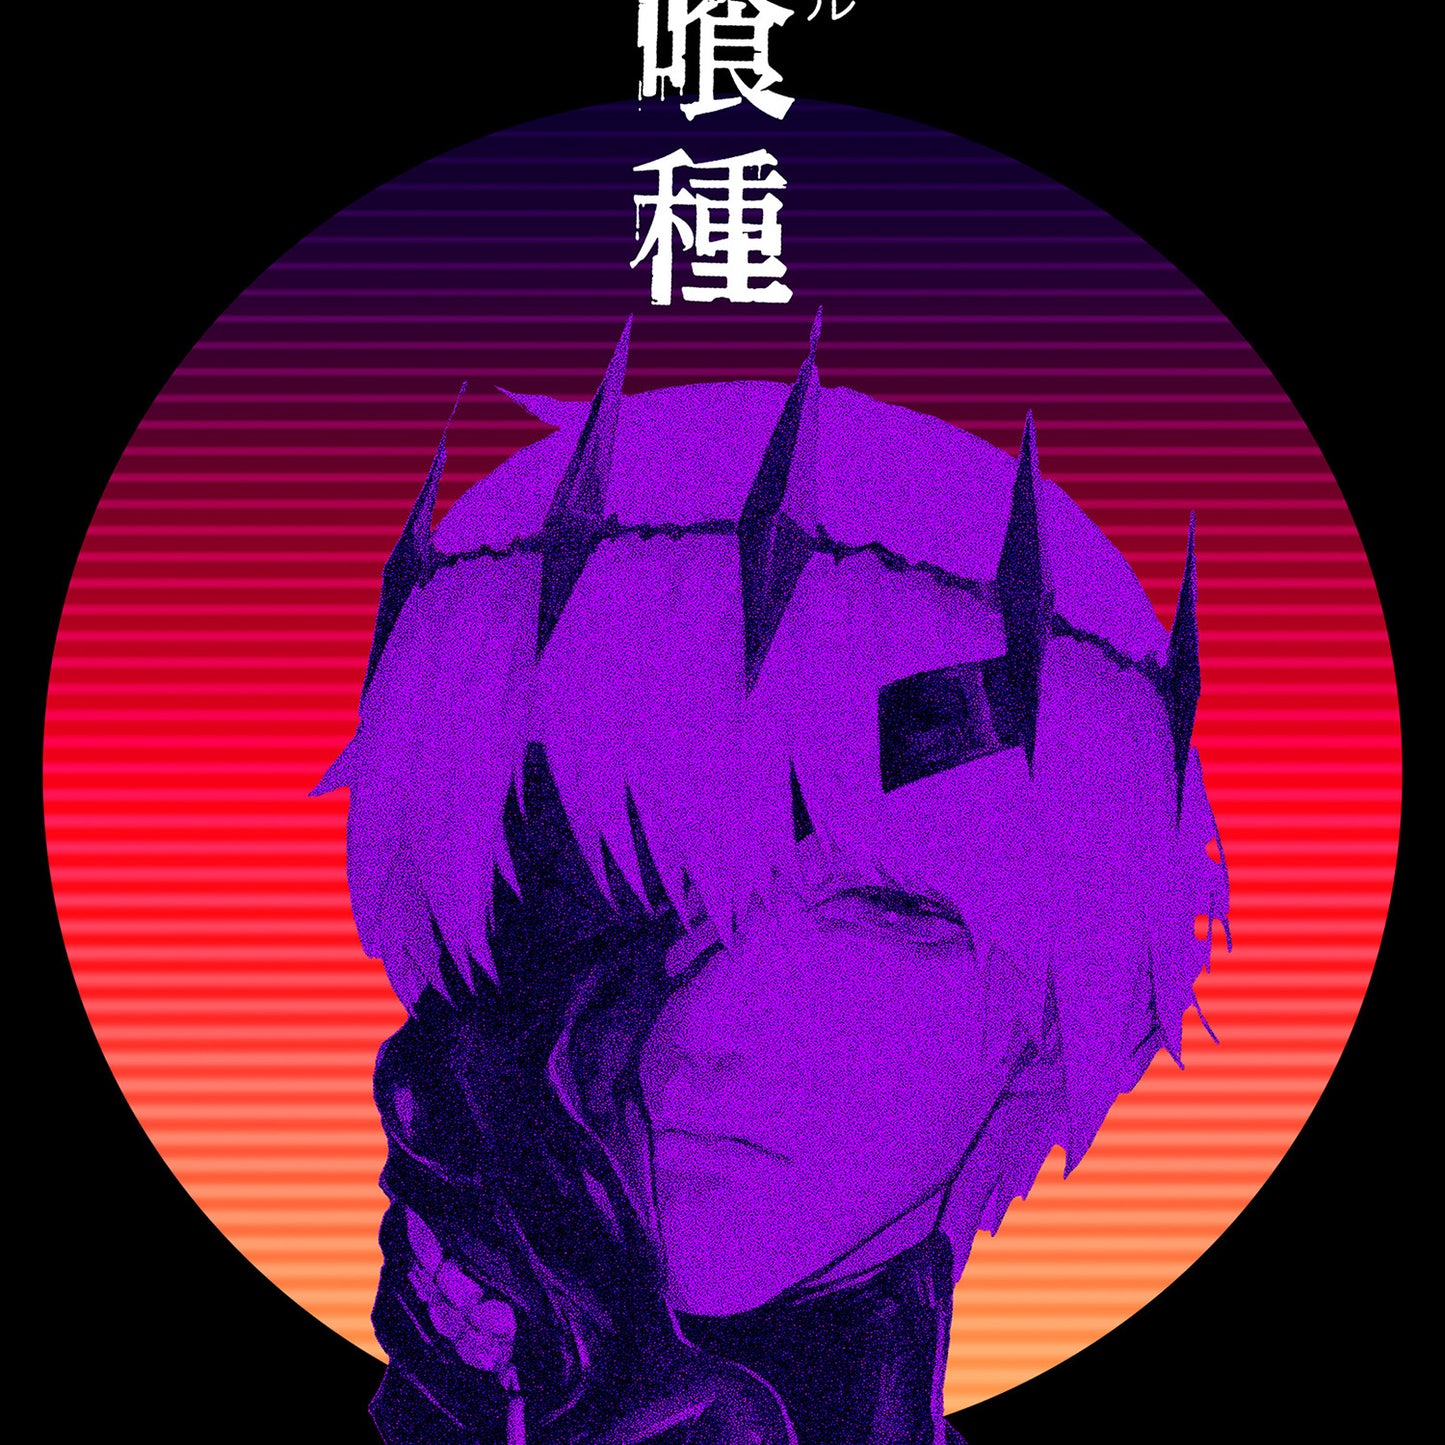 Tokyo Ghoul Poster